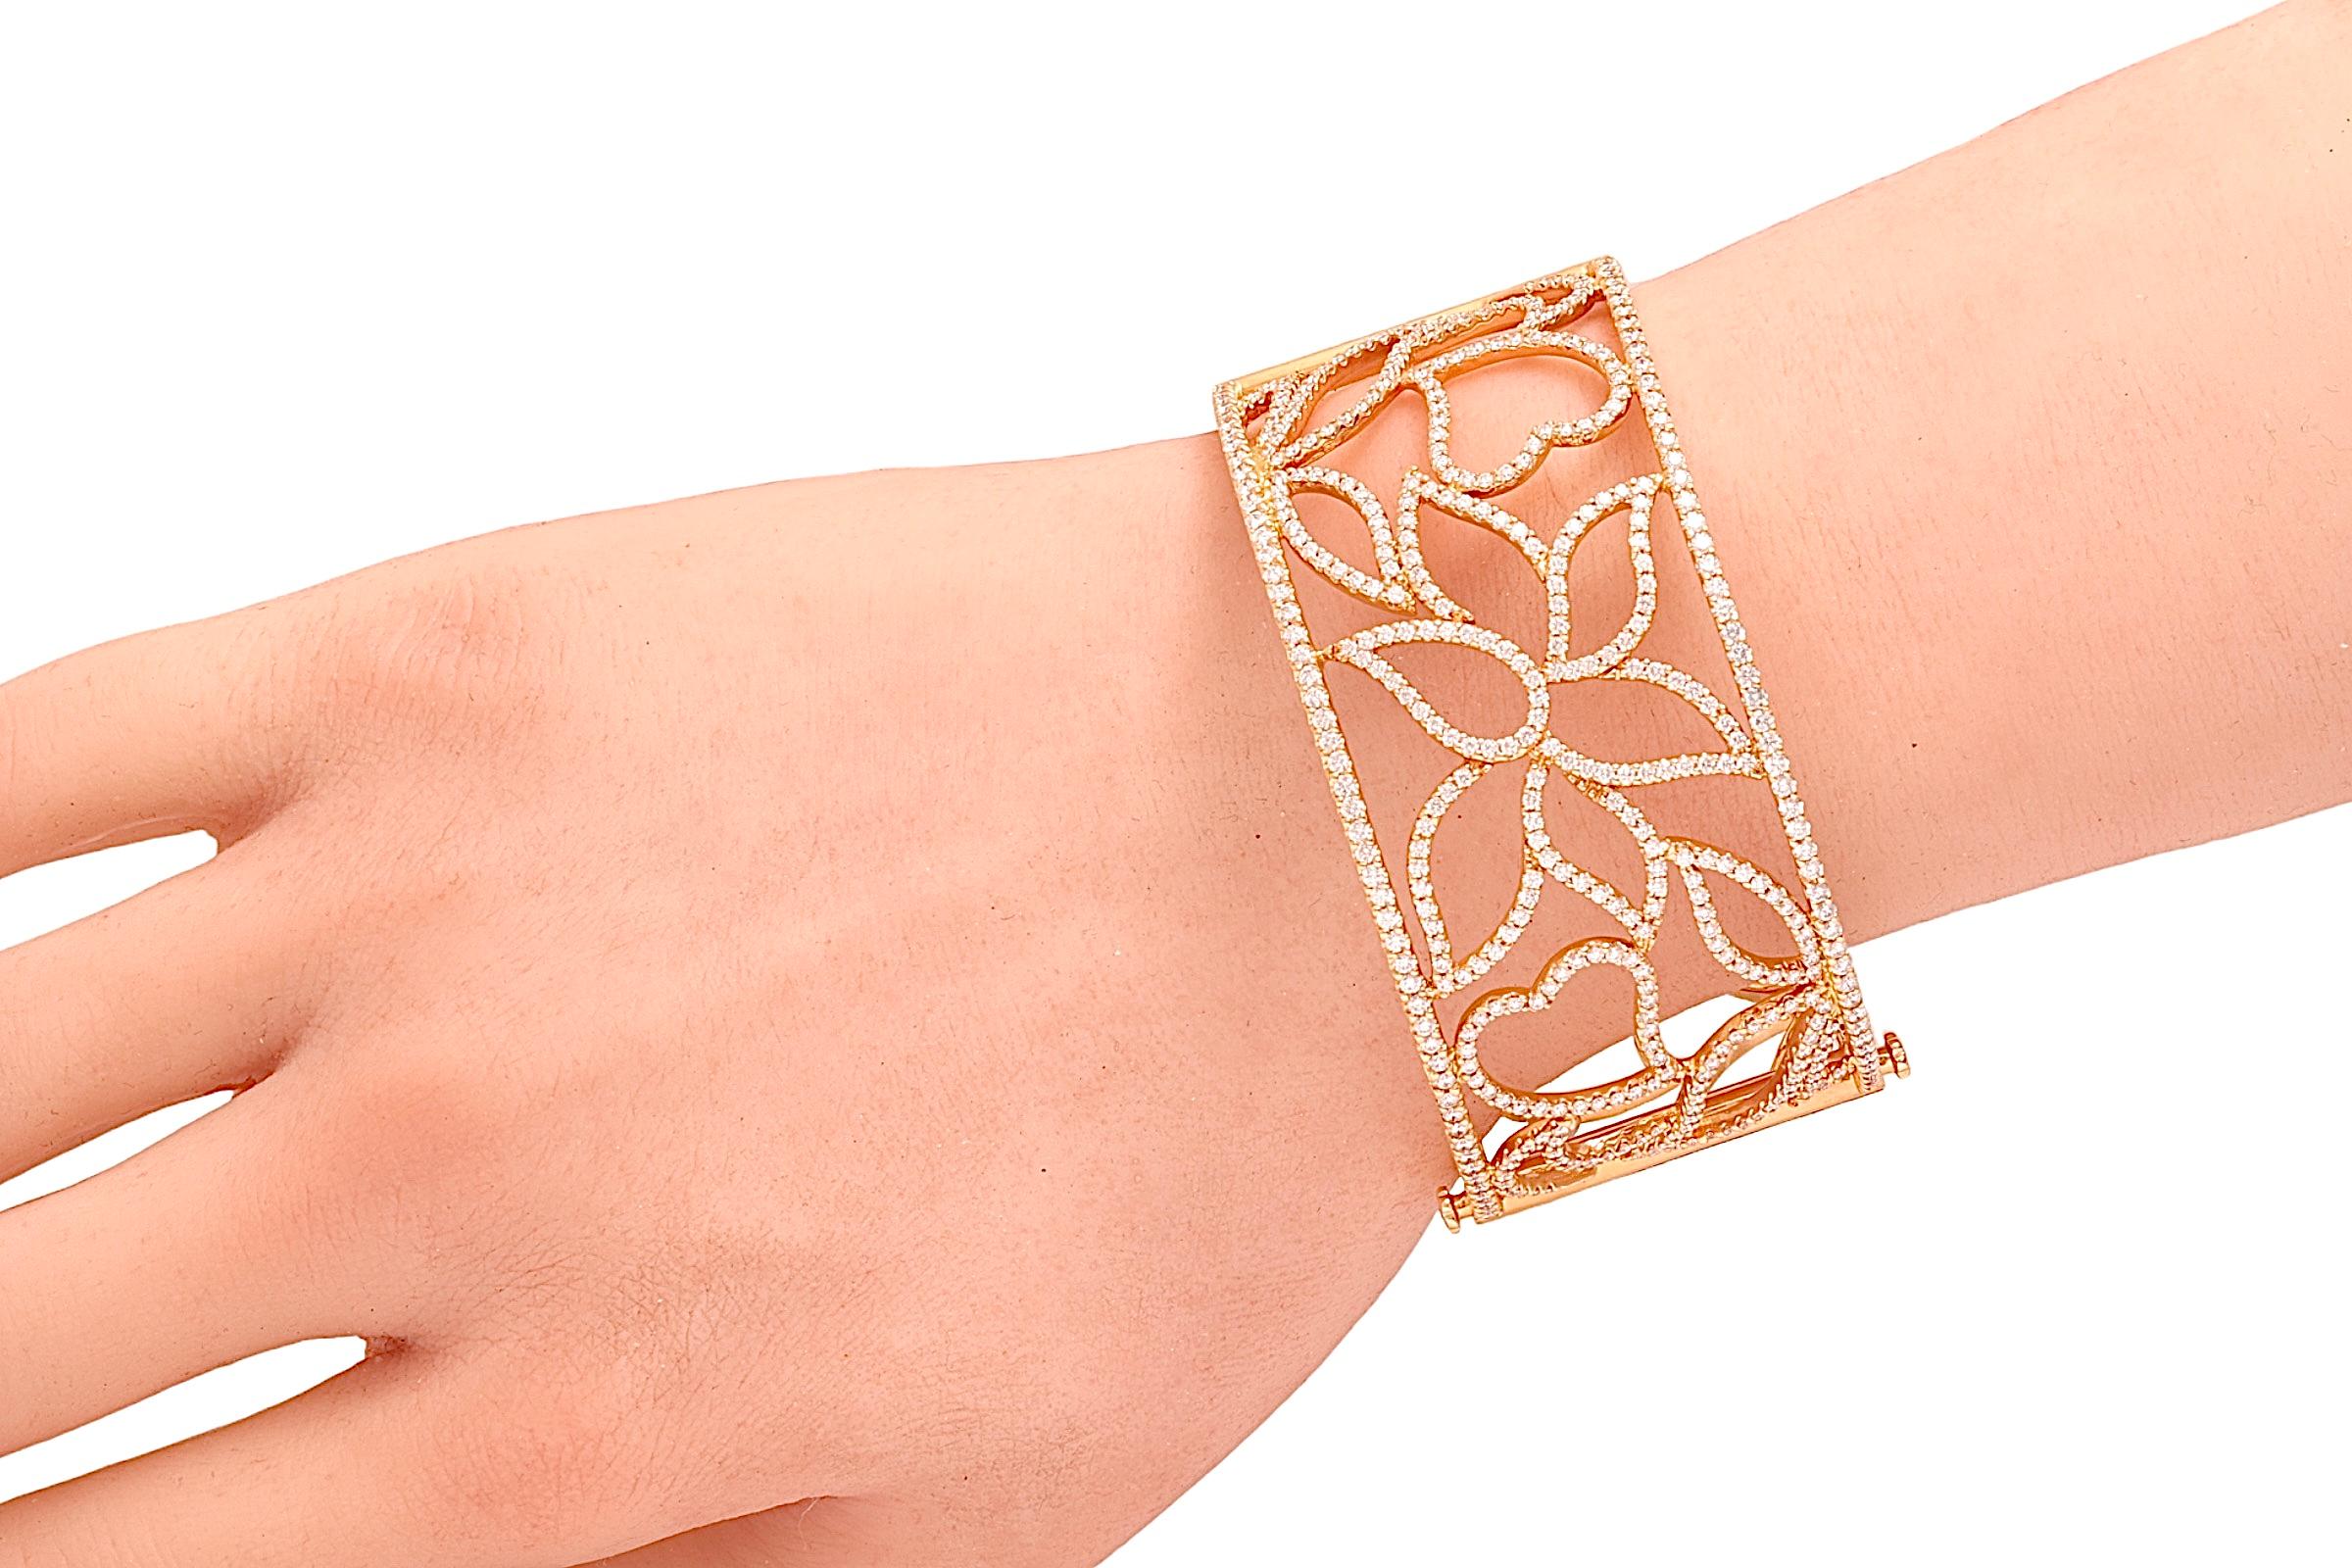 18kt Pink Gold Cuff Bracelet, Flower Design, set with 5.87 ct. Diamonds, 2 Sided For Sale 7